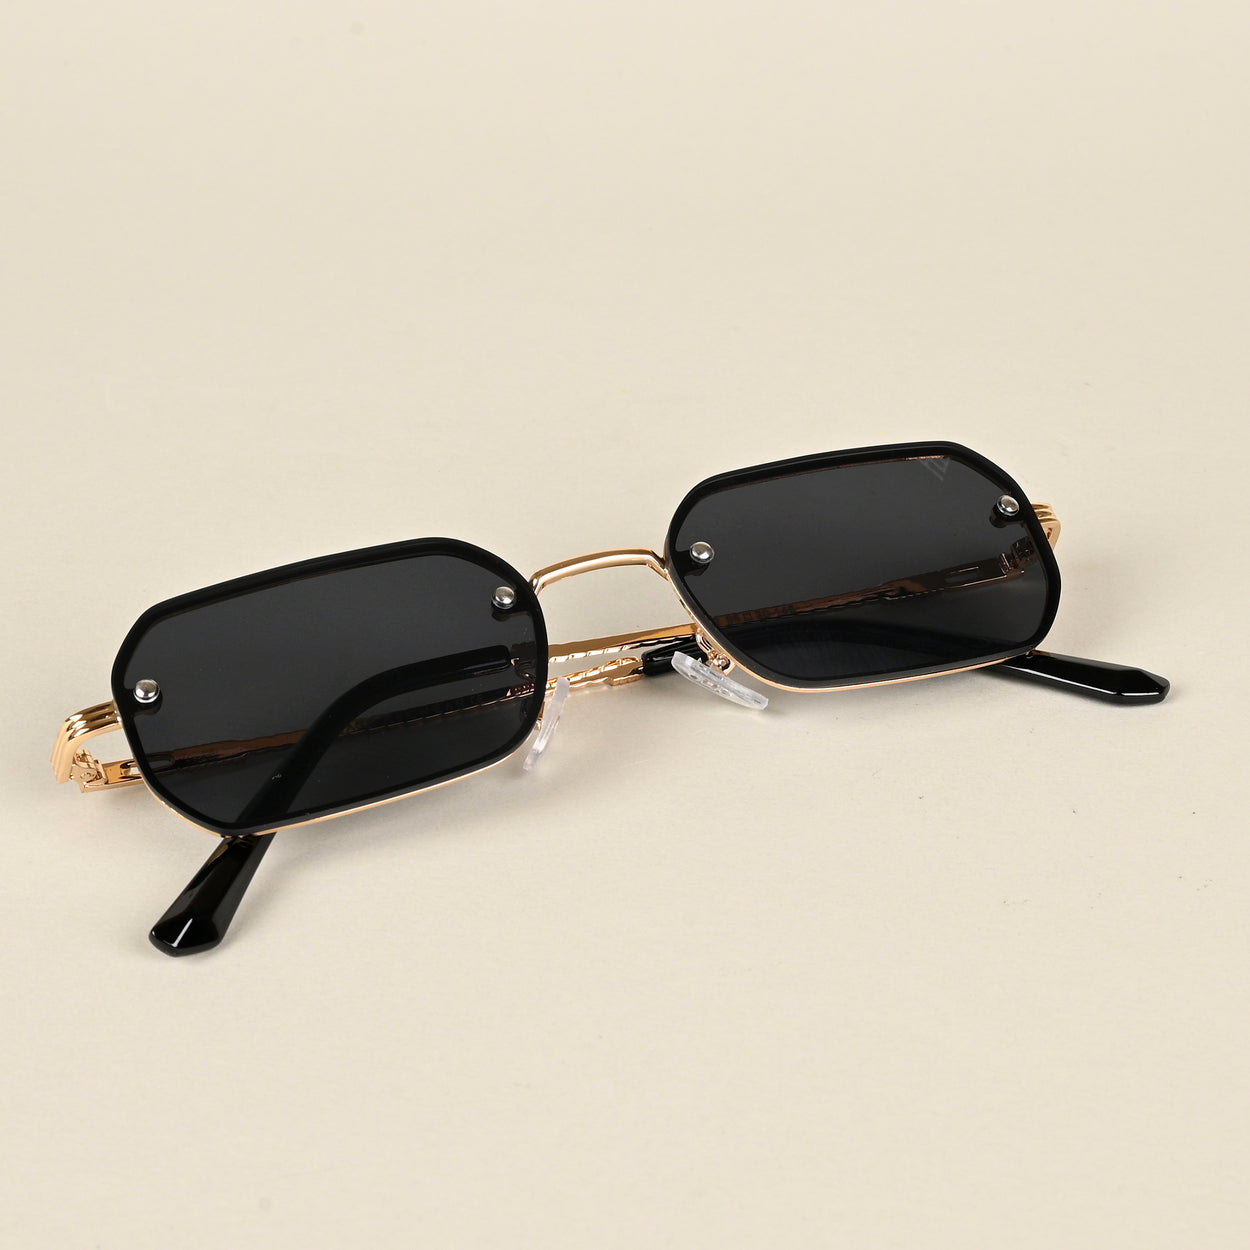 Voyage Black Rectangle Sunglasses for Men & Women - MG4321